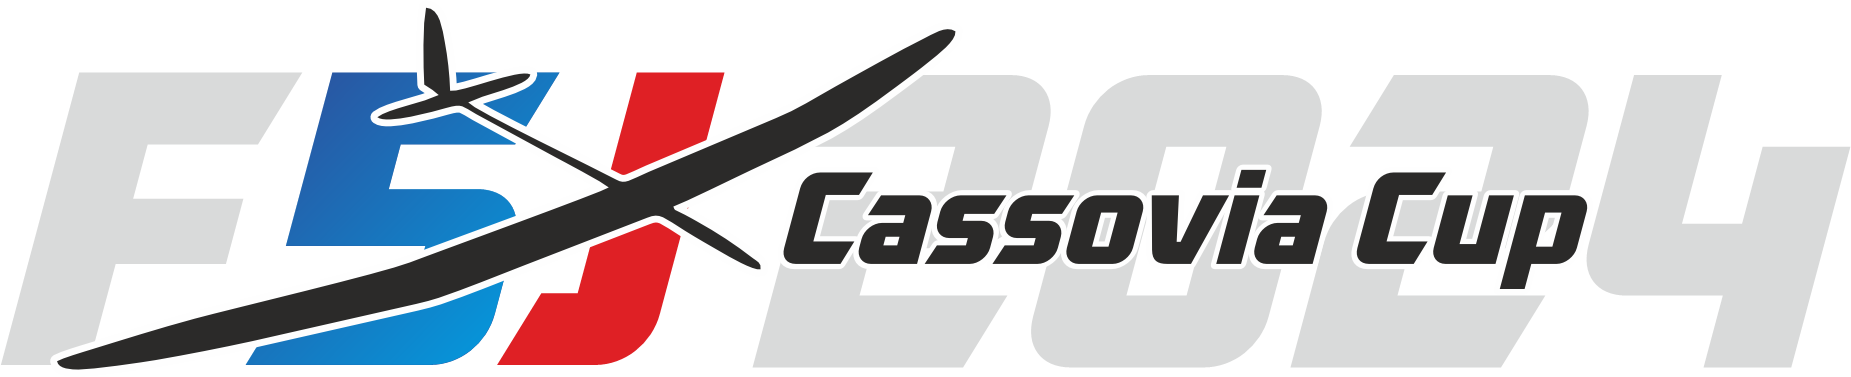 F5J Cassovia Cup